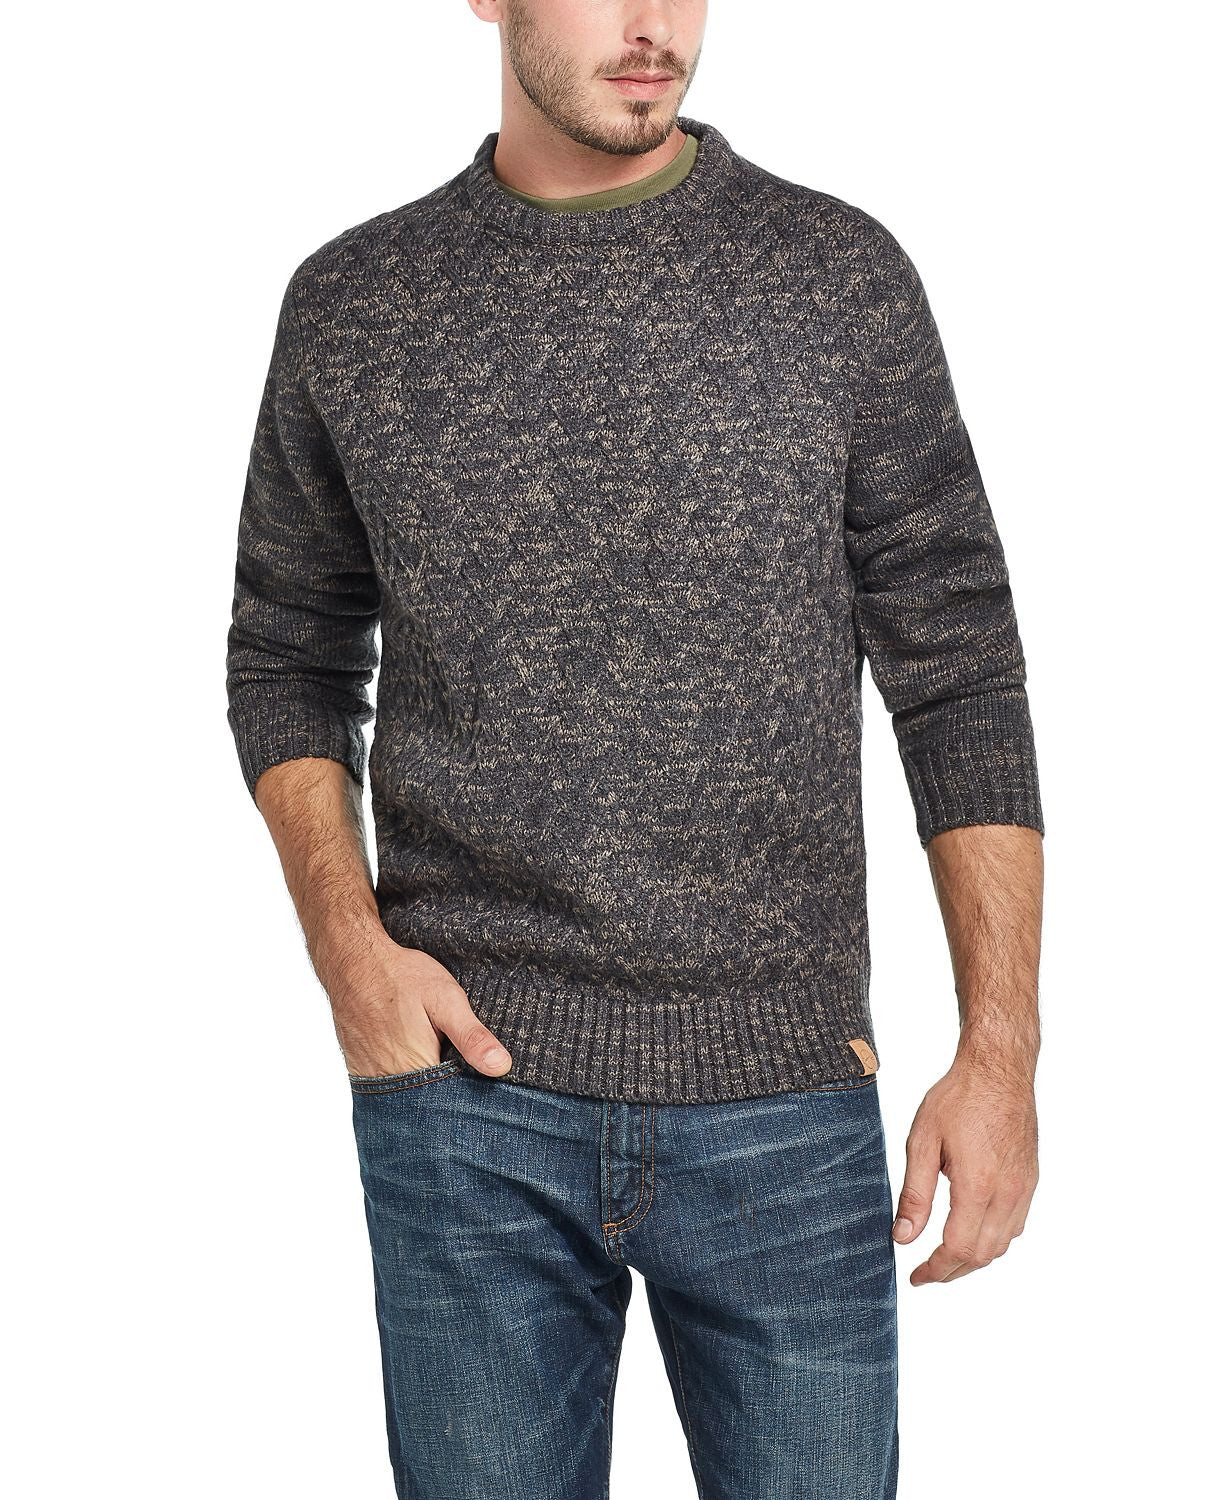 Weatherproof Vintage Cross Stitch Sweater Beige